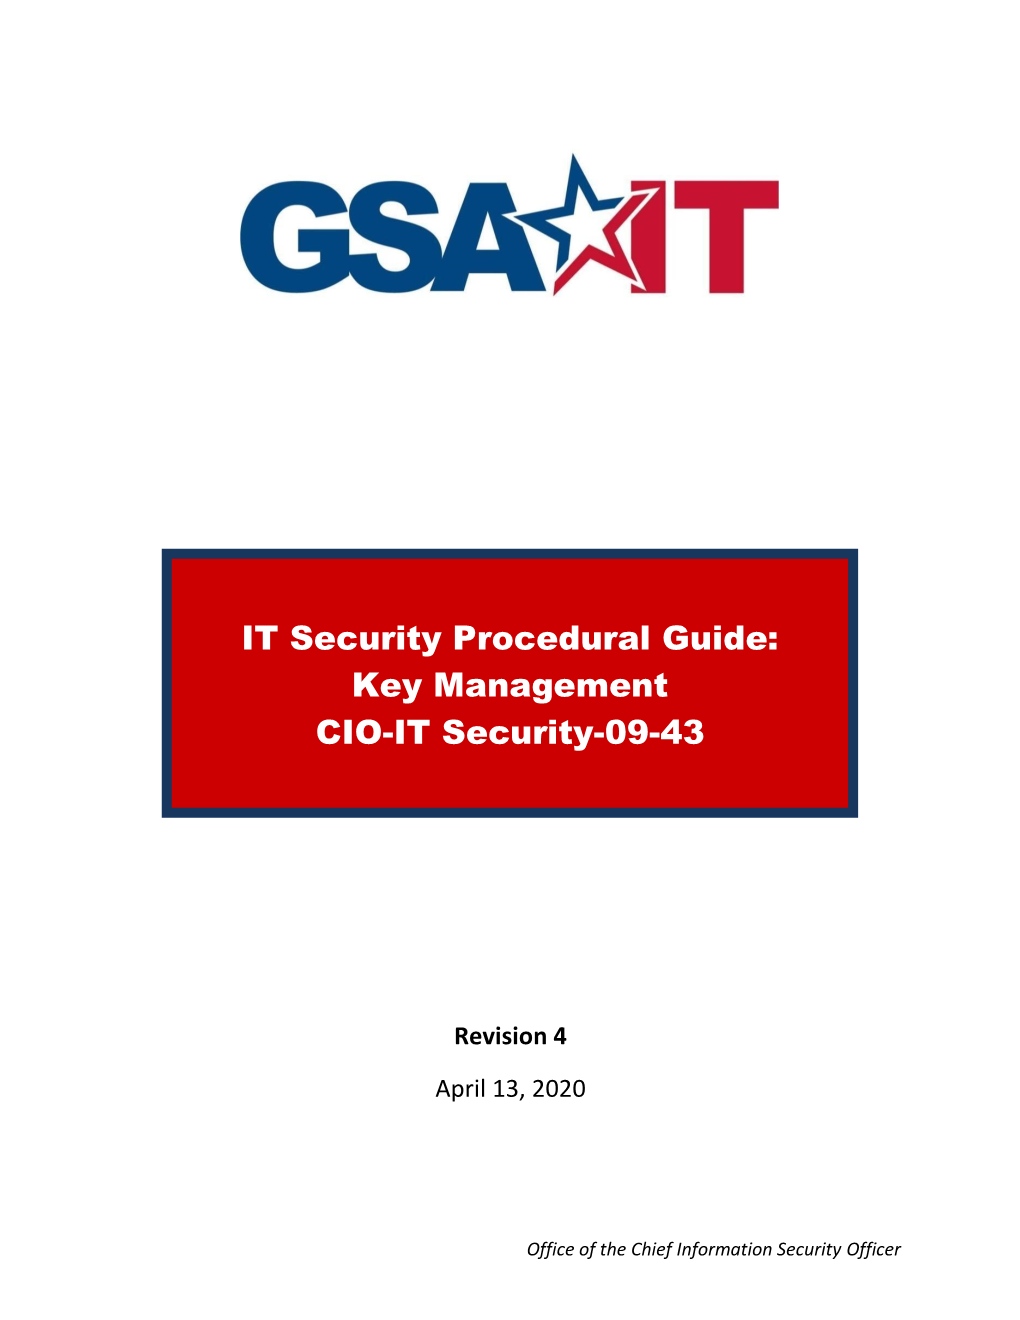 Key Management Guide CIO IT Security